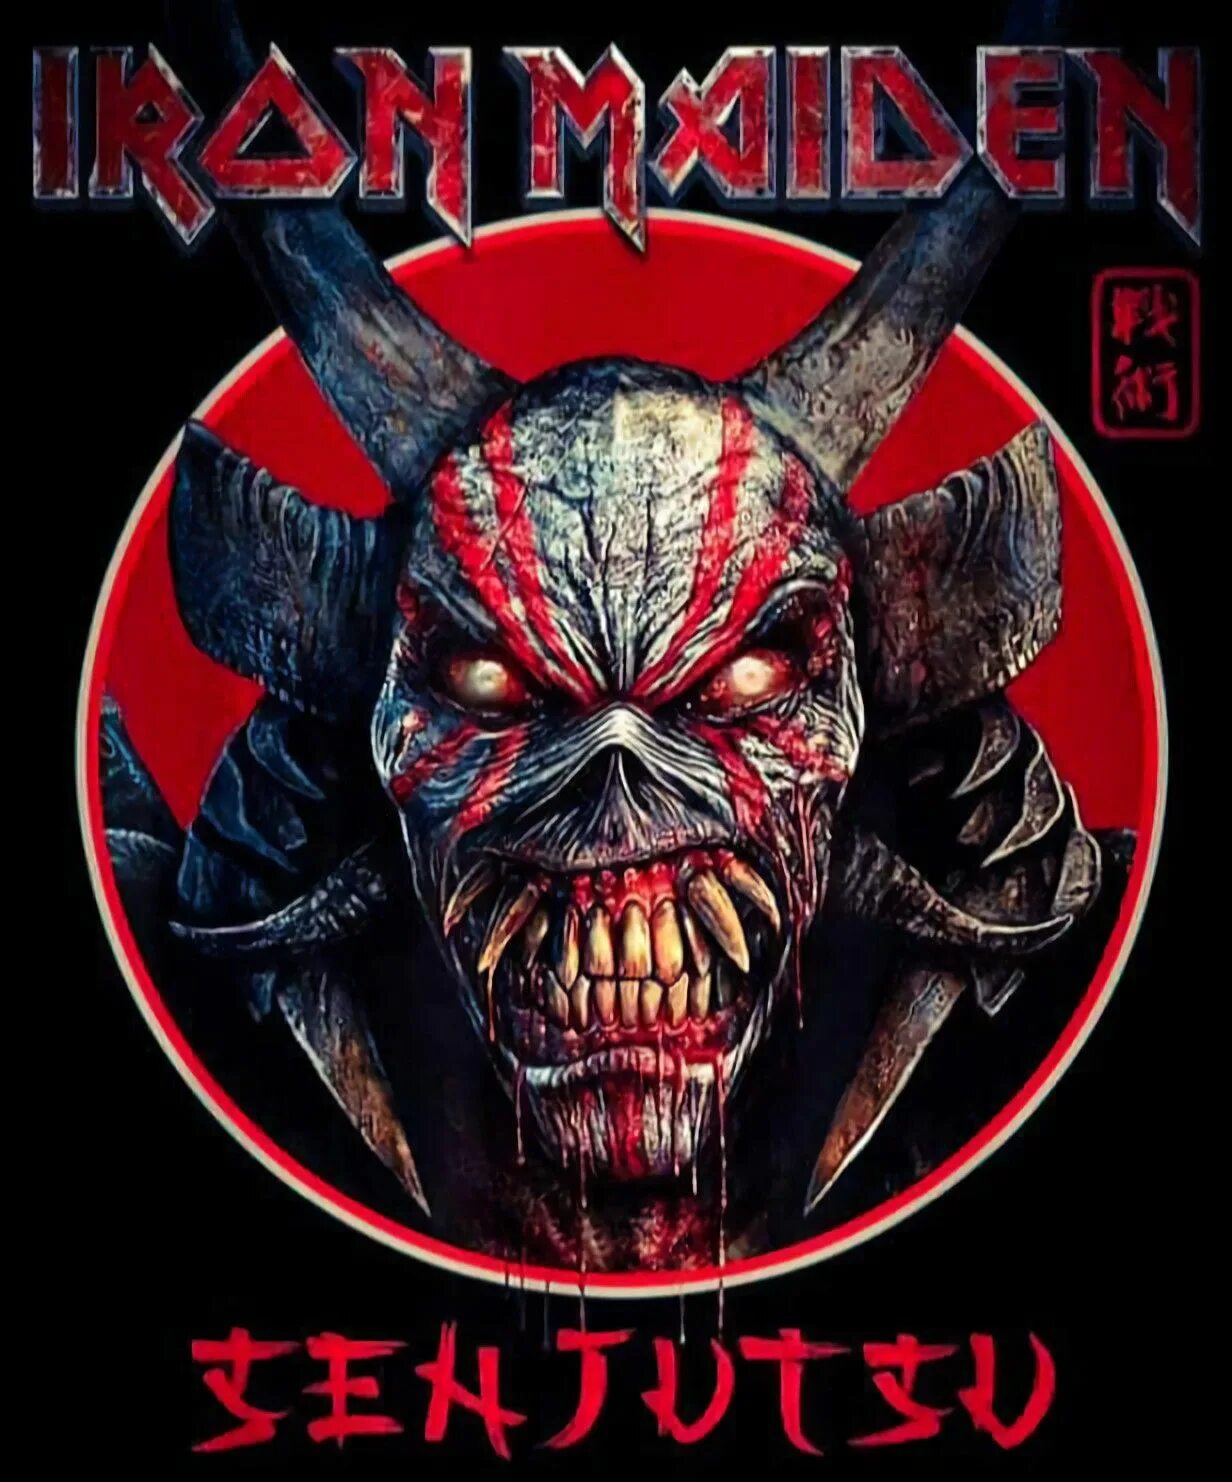 Senjutsu iron maiden. Группа Iron Maiden 2021. Iron Maiden Senjutsu 2021. Iron Maiden "Senjutsu". Iron Maiden Senjutsu обложка.